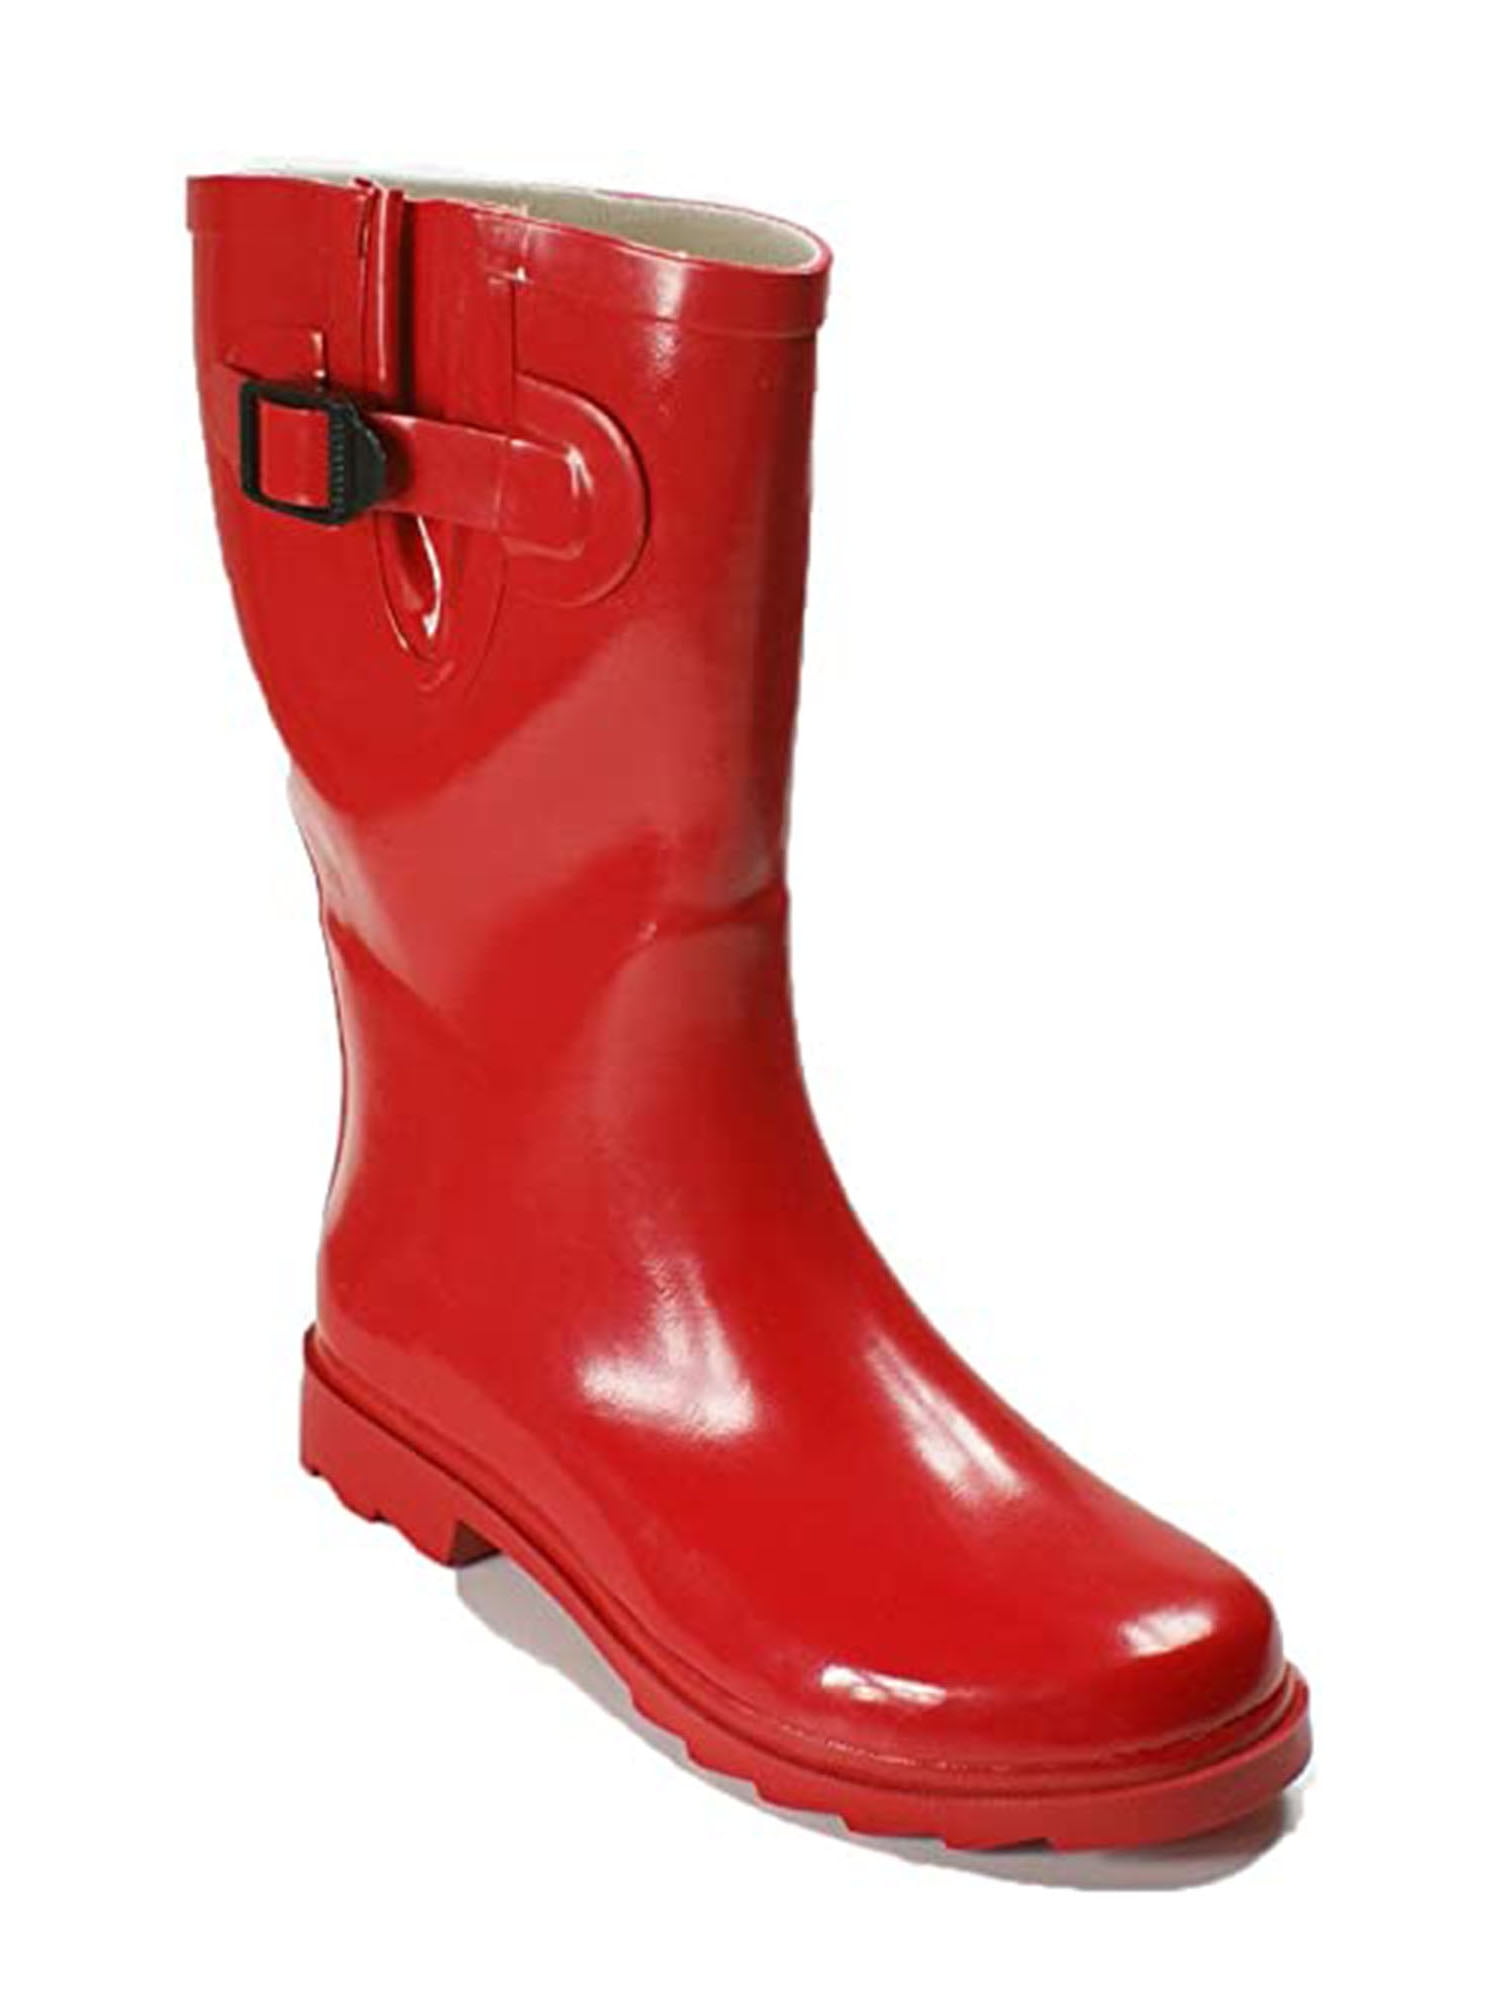 Tanleewa Women's Rain Boots Nonslip Rain Shoes Waterproof Garden Boots ...